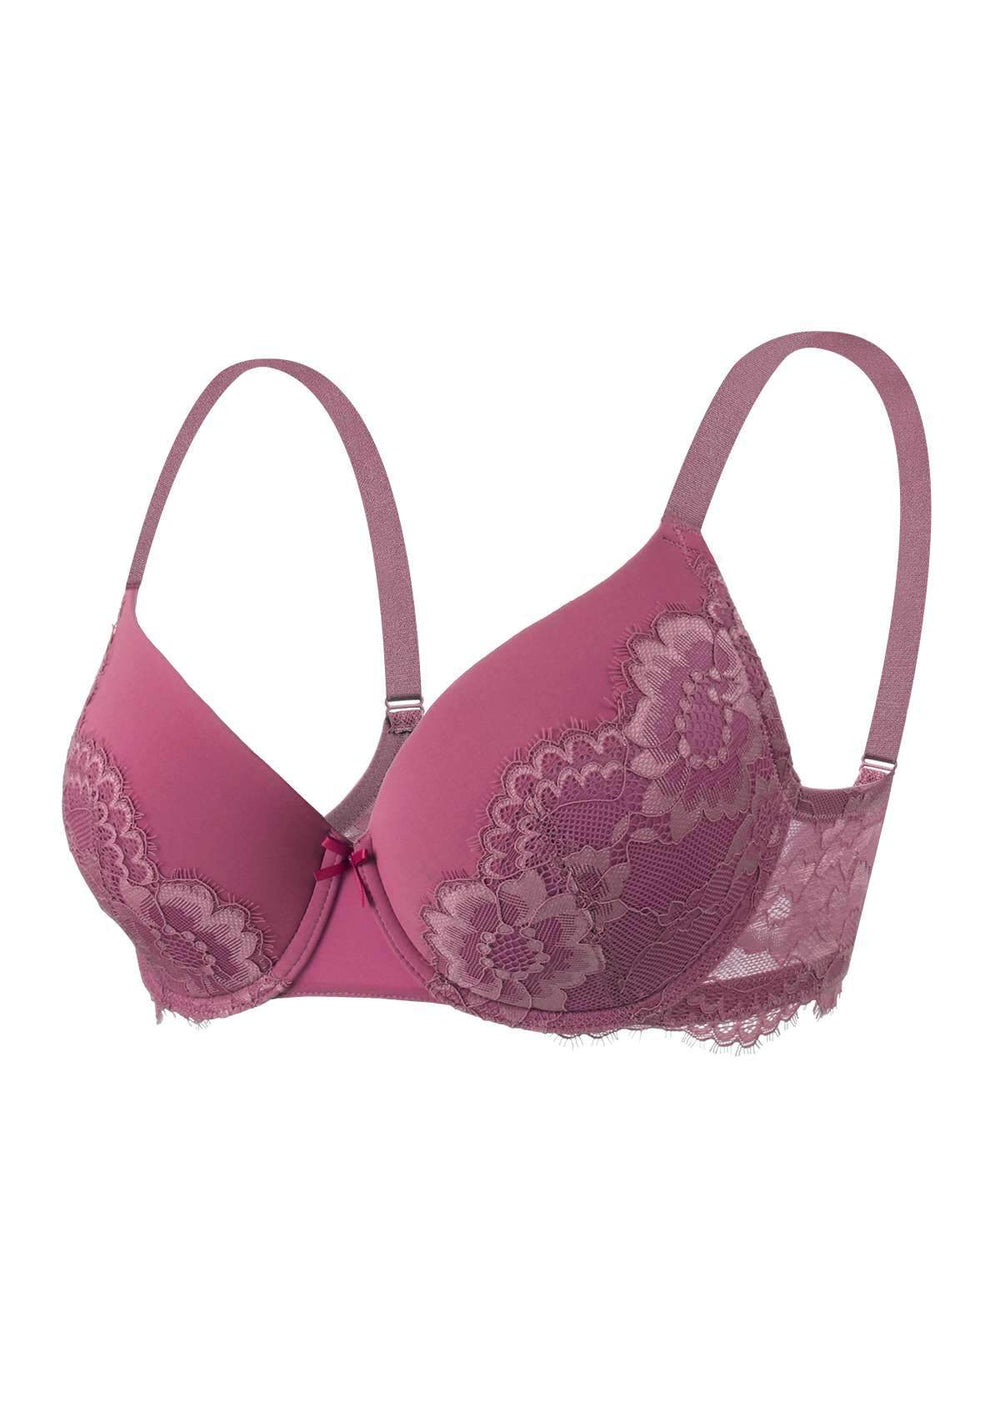 Fuchsia Fever Comfort Bra, Brief, Suspender & Bag Gift Set - Mimi Holliday